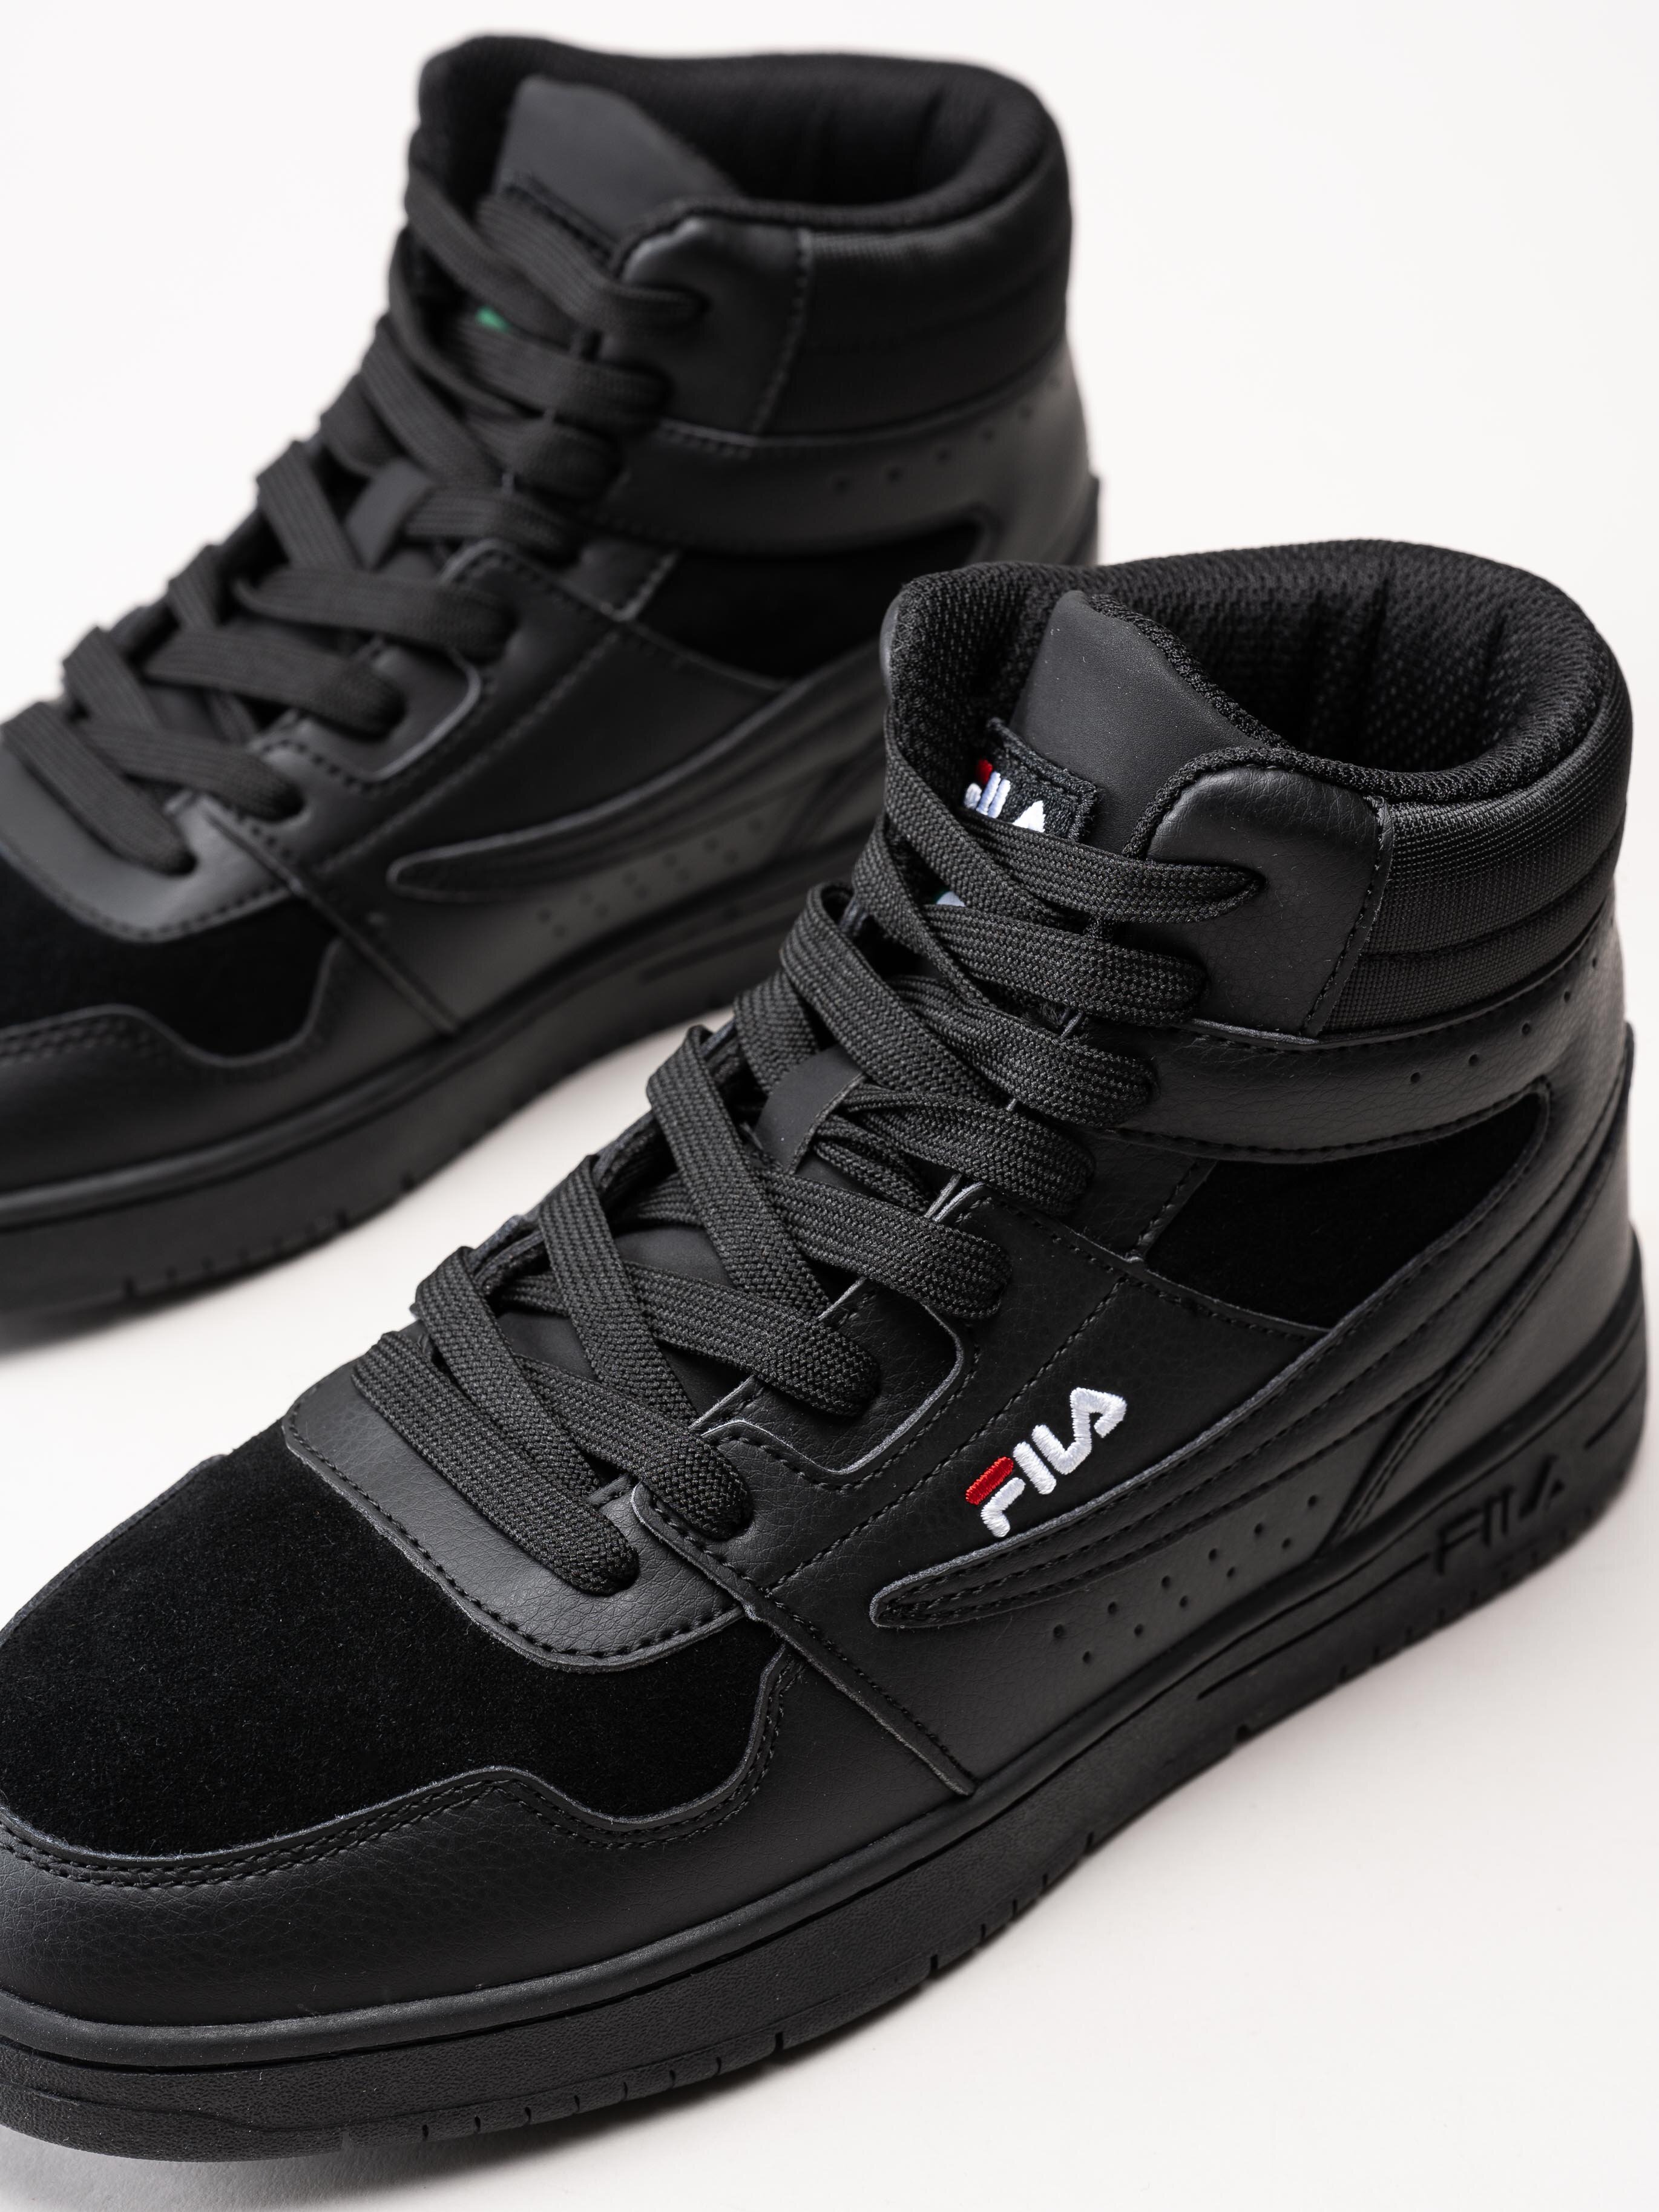 FILA - Arcade Mid Teens - Svarta höga sneakers